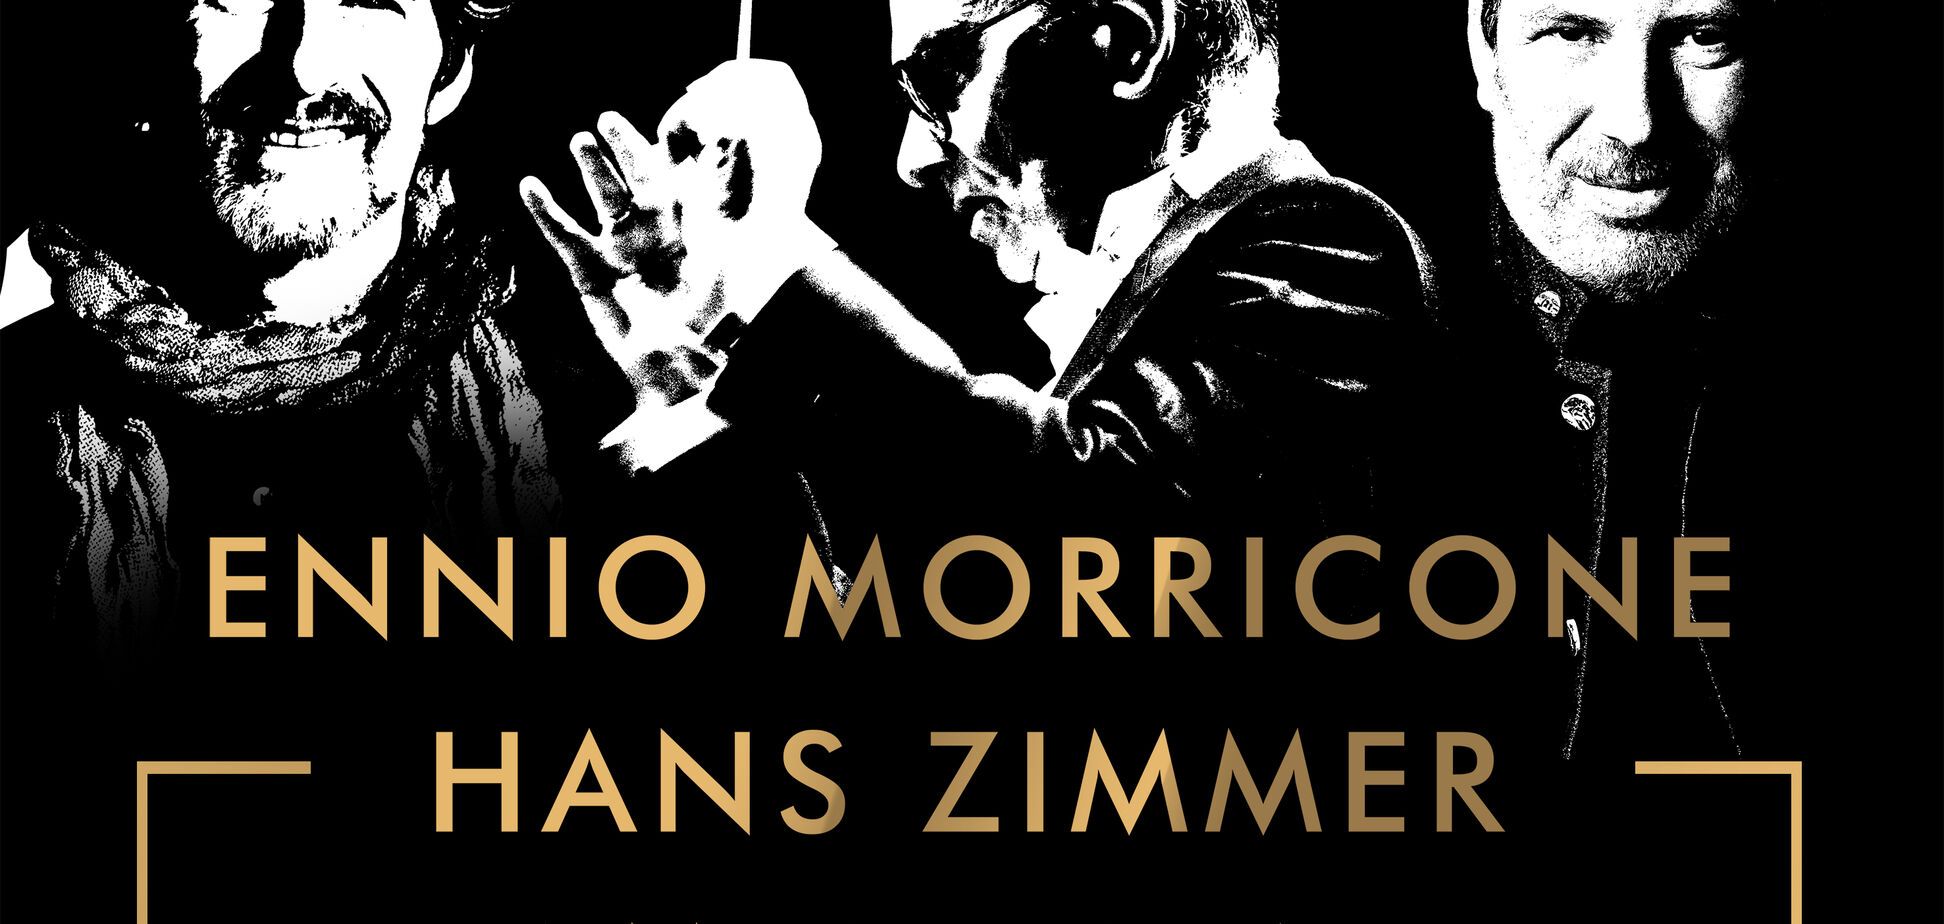 Ennio Morricone, Hans Zimmer, James Horner зазвучать у виконанні оркестра Lords of the Sound